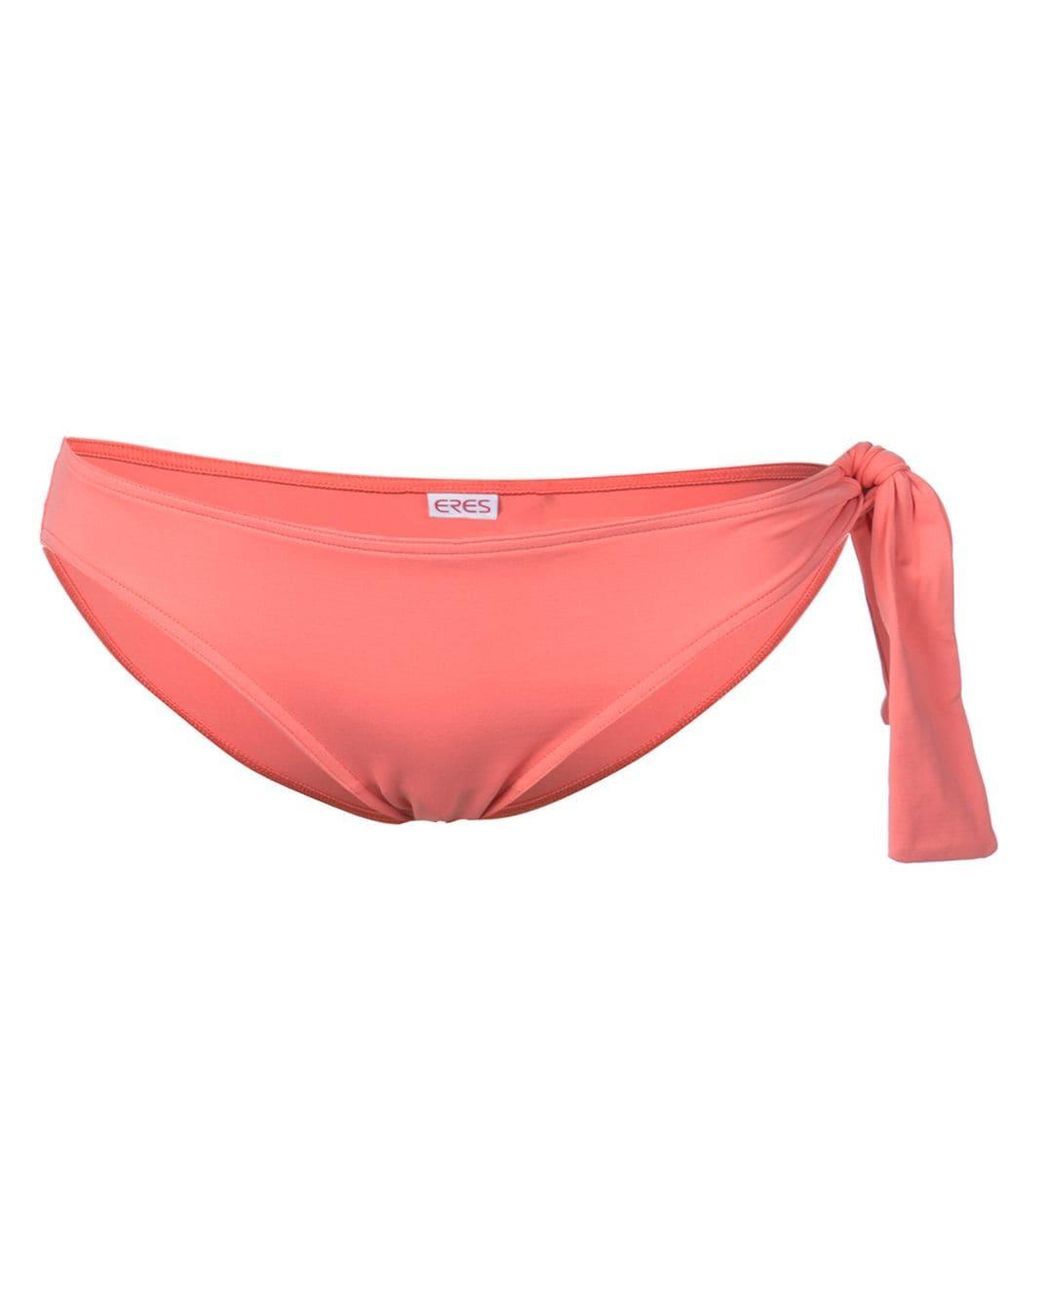 Eres Synthetic Halterneck Bikini in Pink - Lyst